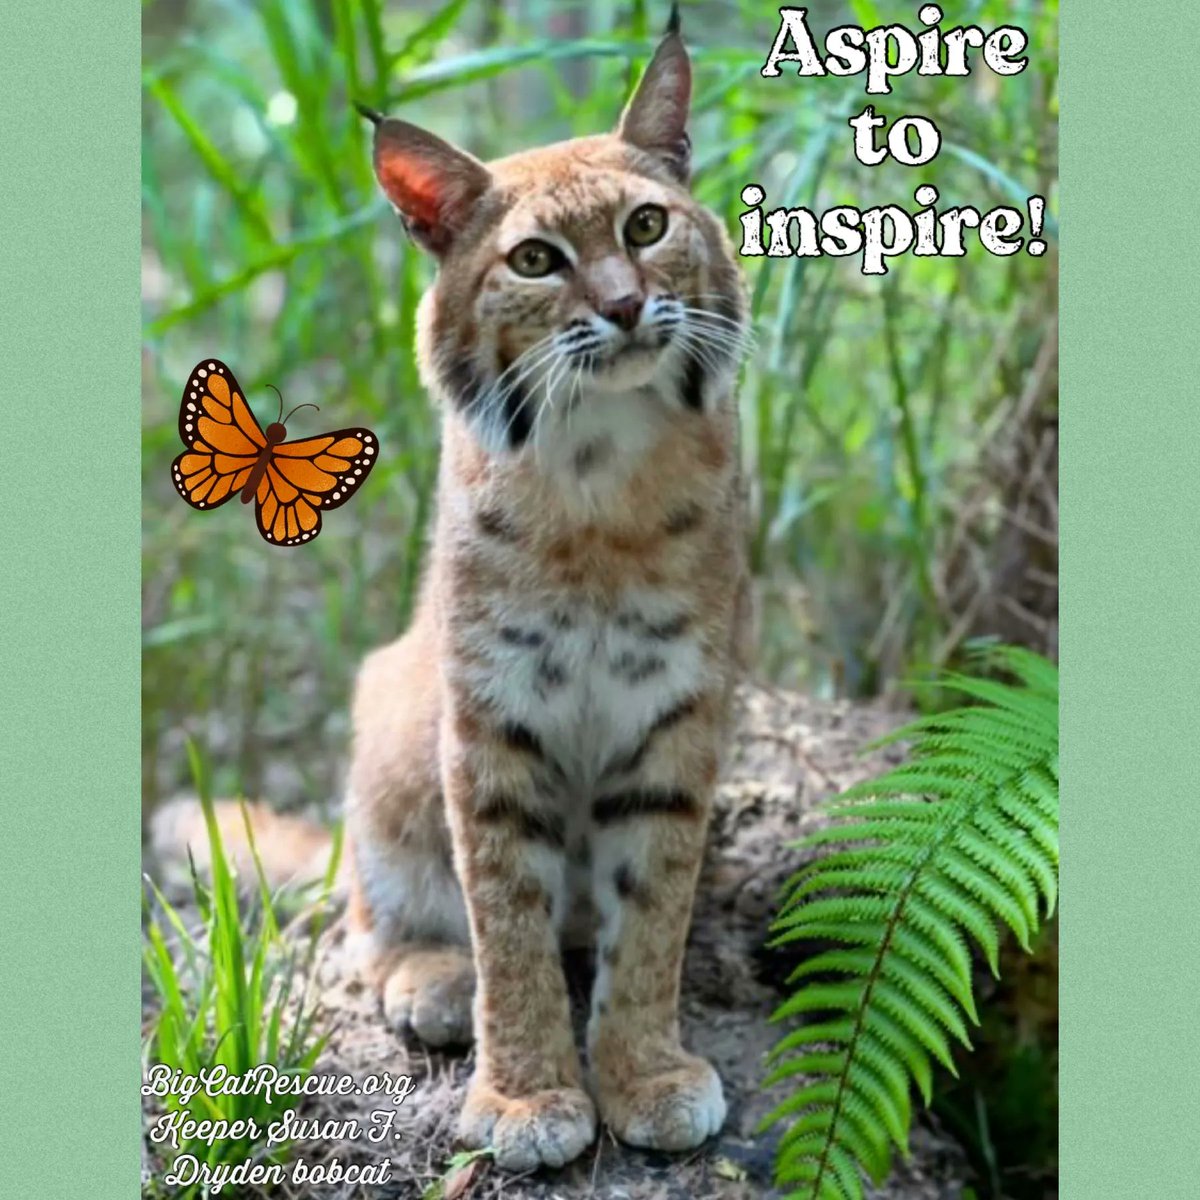 “Aspire to inspire!”

#DrydenBobcat #BigCatRescue #Rescue #BigCats #Bobcat #AspireToInspire #Inspiration #Florida #Sanctuary #CaroleBaskin #Quotes #QuotesToLiveBy #Inspiration #inspirationalQuotes